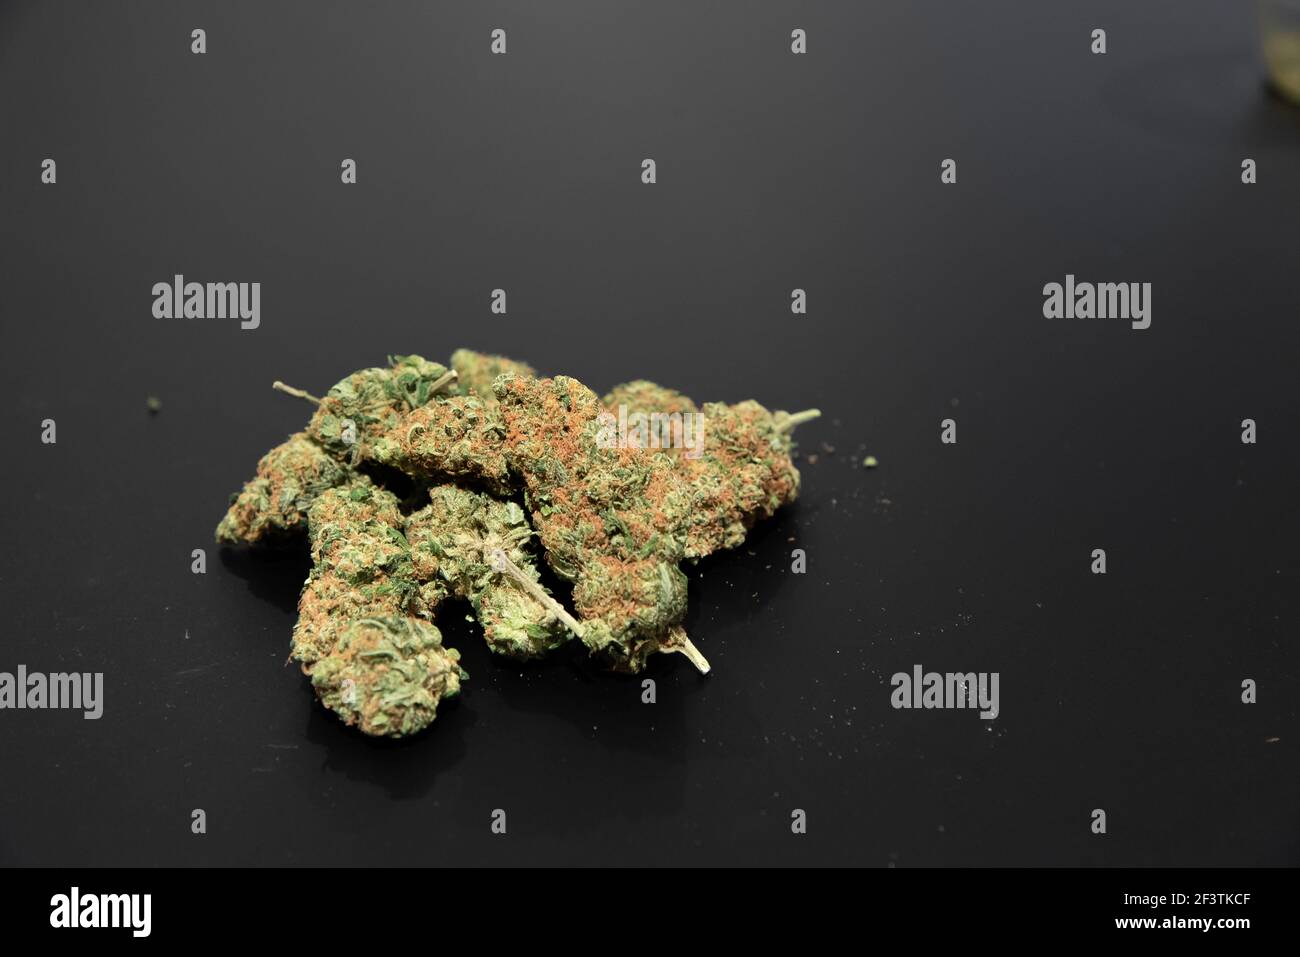 thc or cbd Cannabis buds on a table Stock Photo